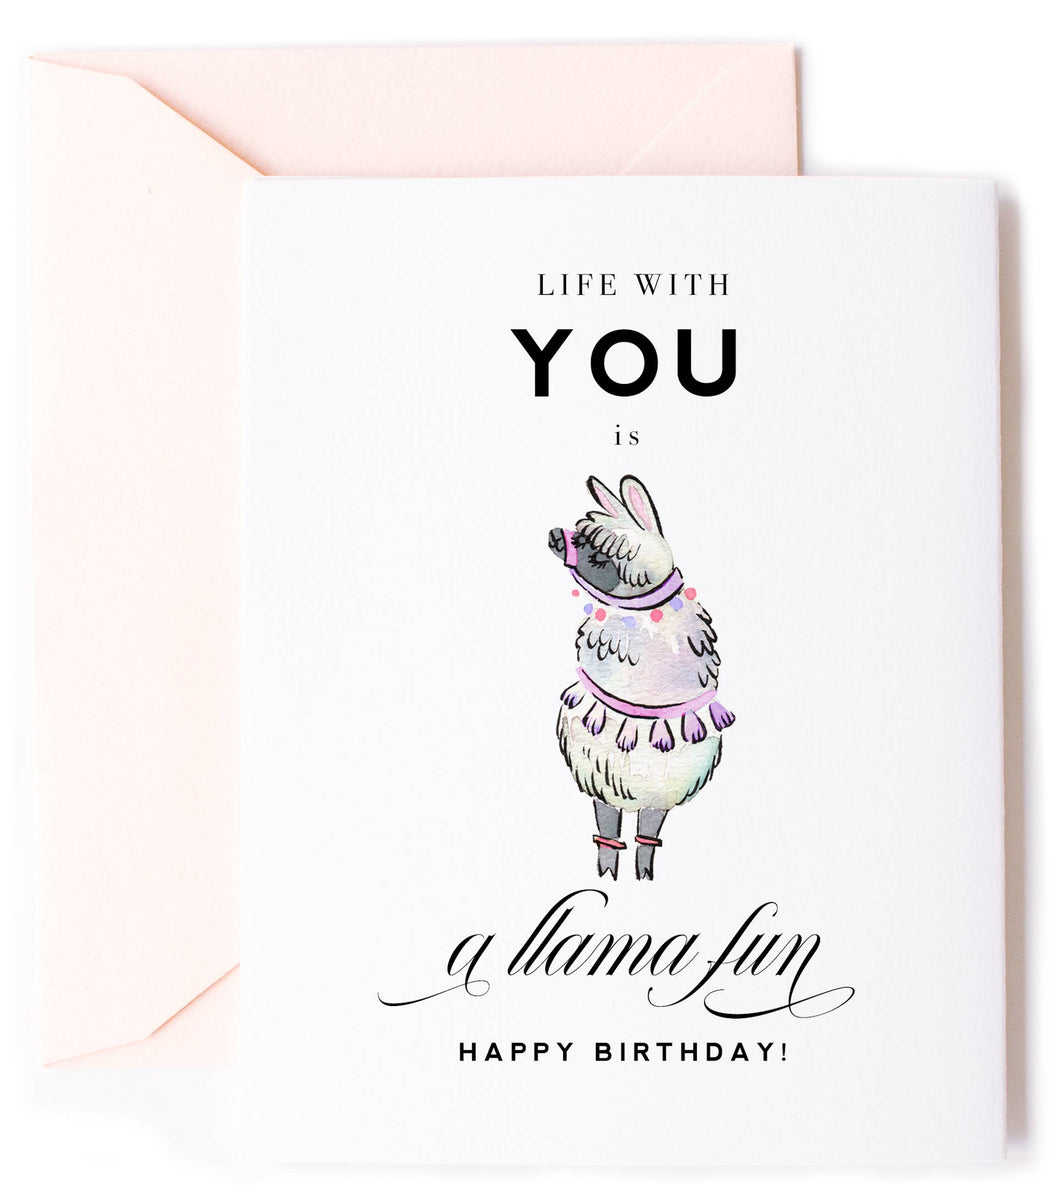 Kitty Meow Boutique - A Llama Fun, Llama Birthday Card for Kids